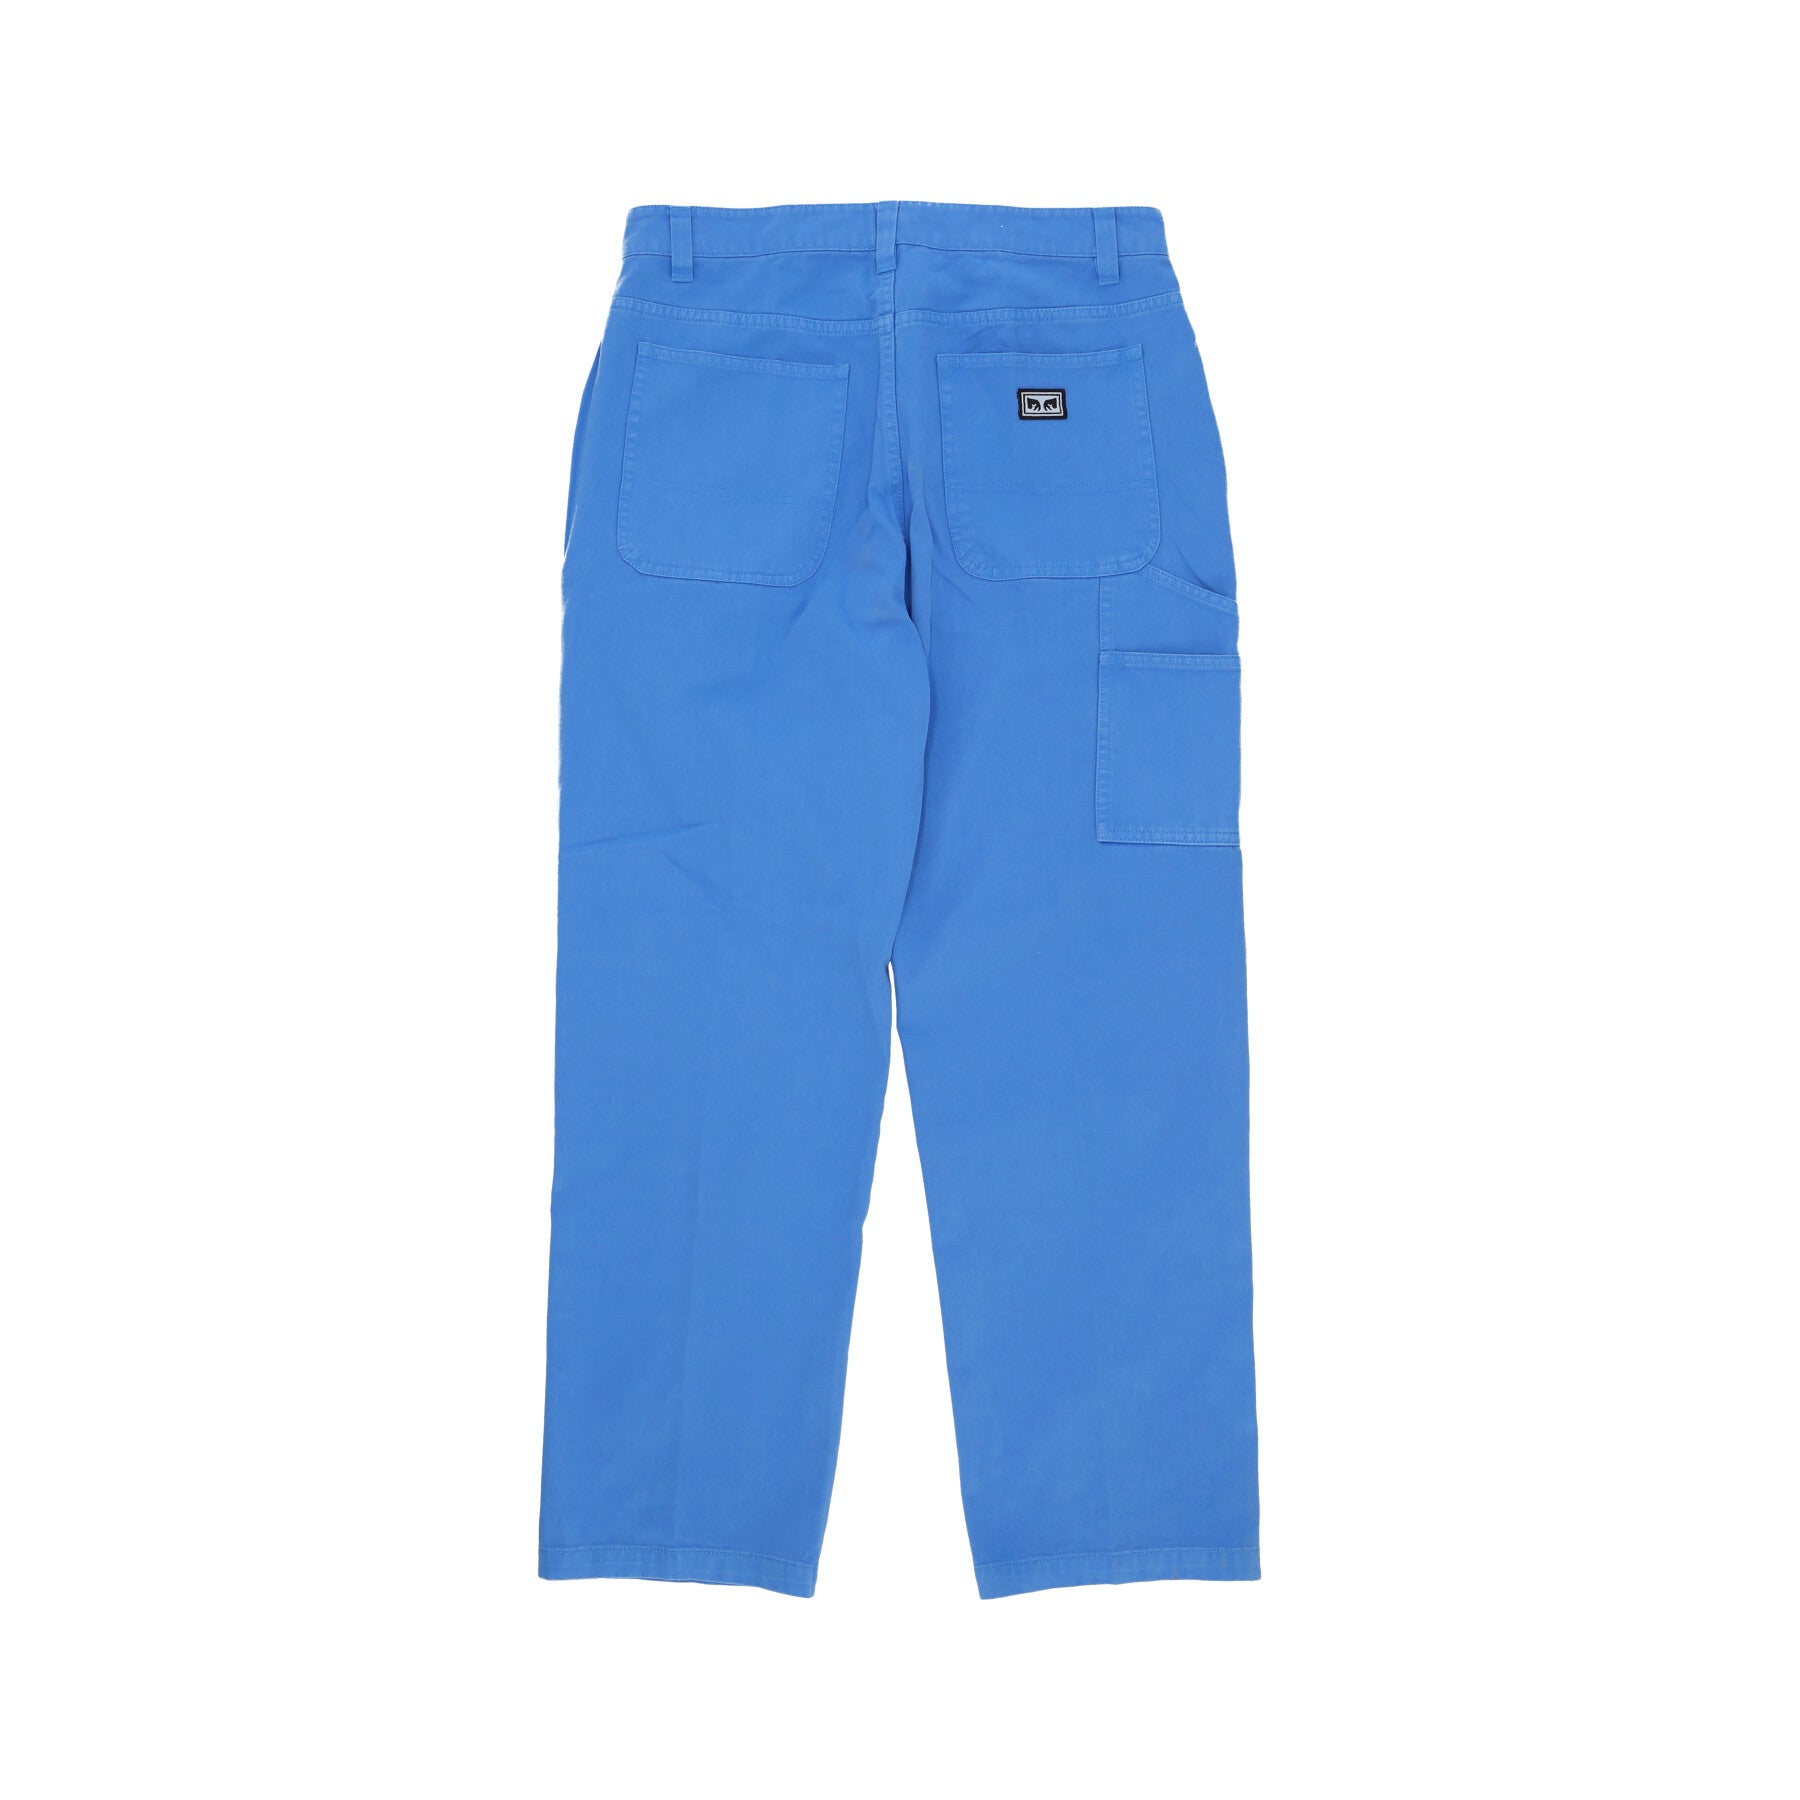 Pantalone Lungo Uomo Hardwork Pigment Carpenter Pant French Blue 142020232